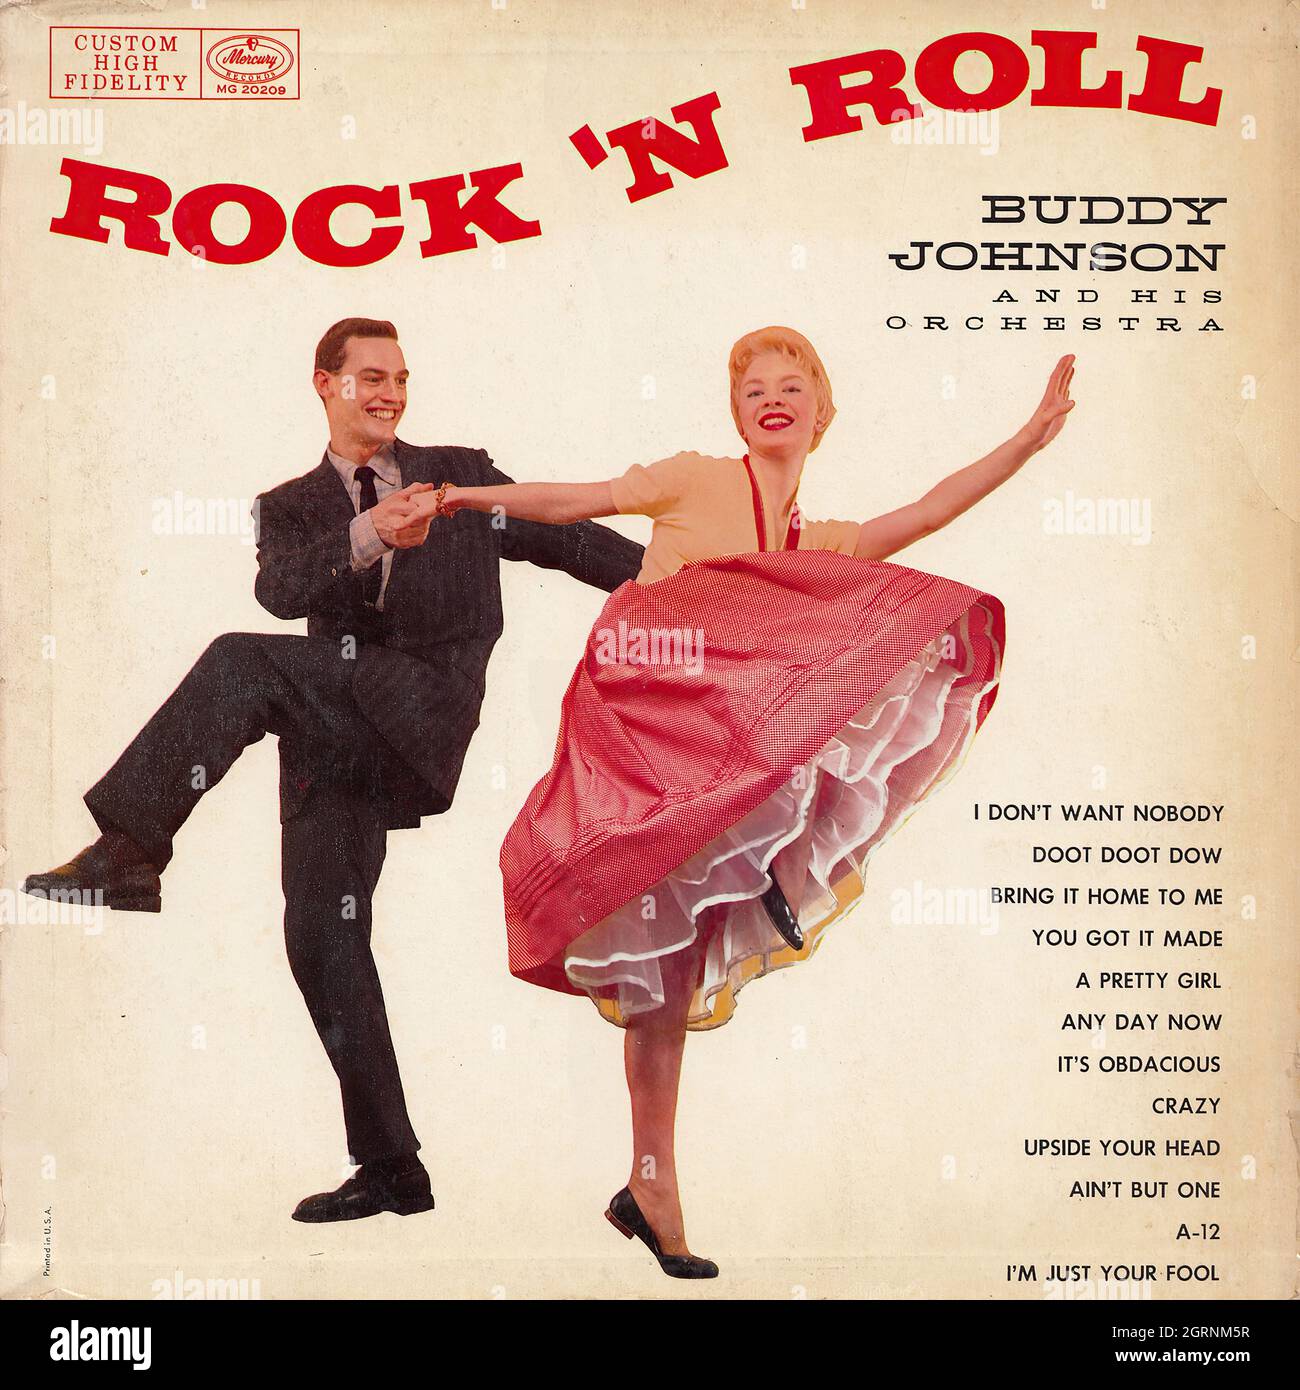 Buddy Johnson et son orchestre - Rock'n Roll - Vintage Vinyl Record Cover Banque D'Images